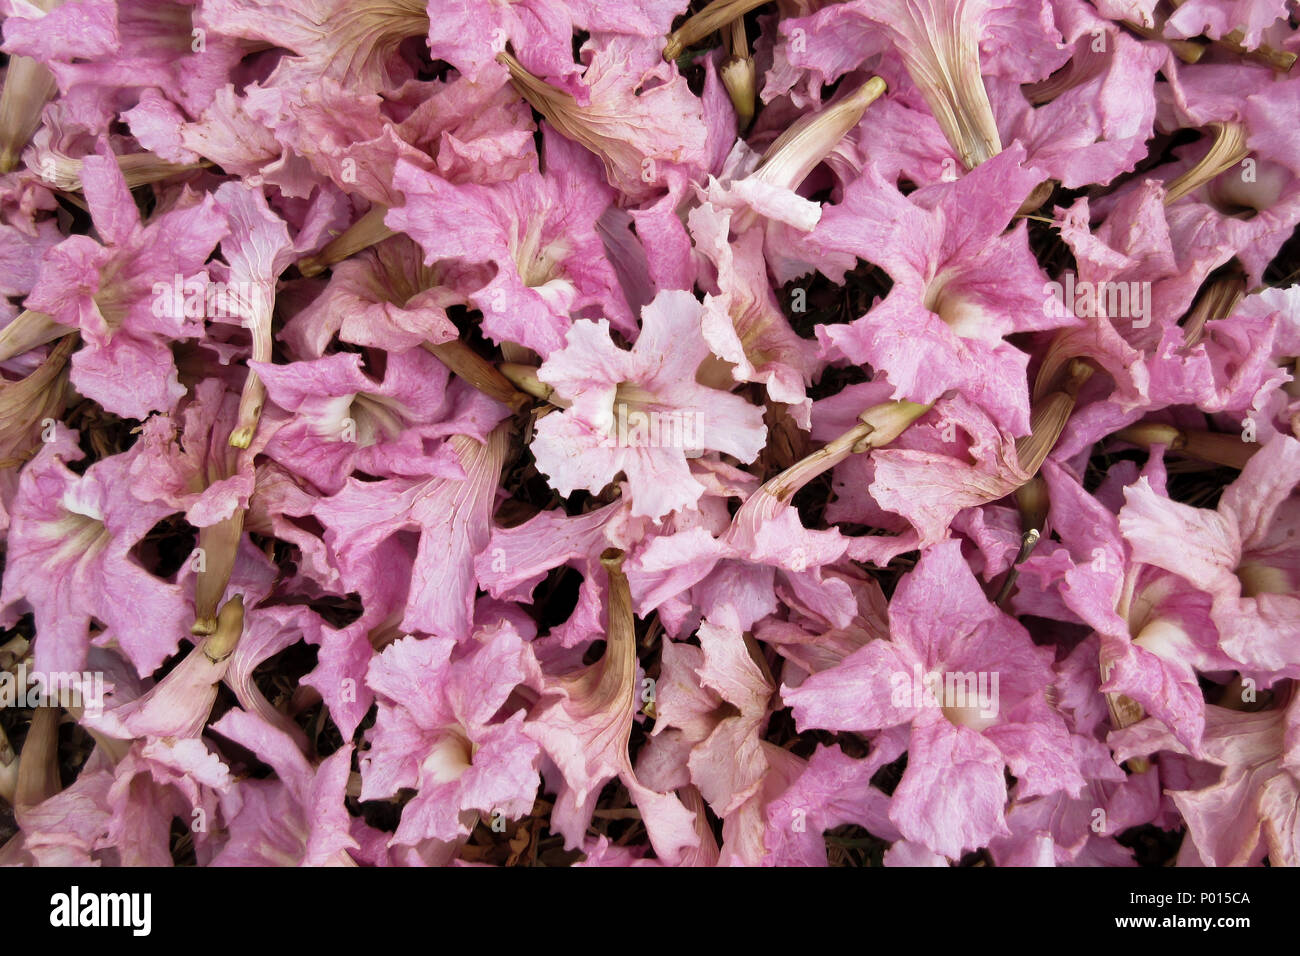 Pink flowers carpet Stock Photo